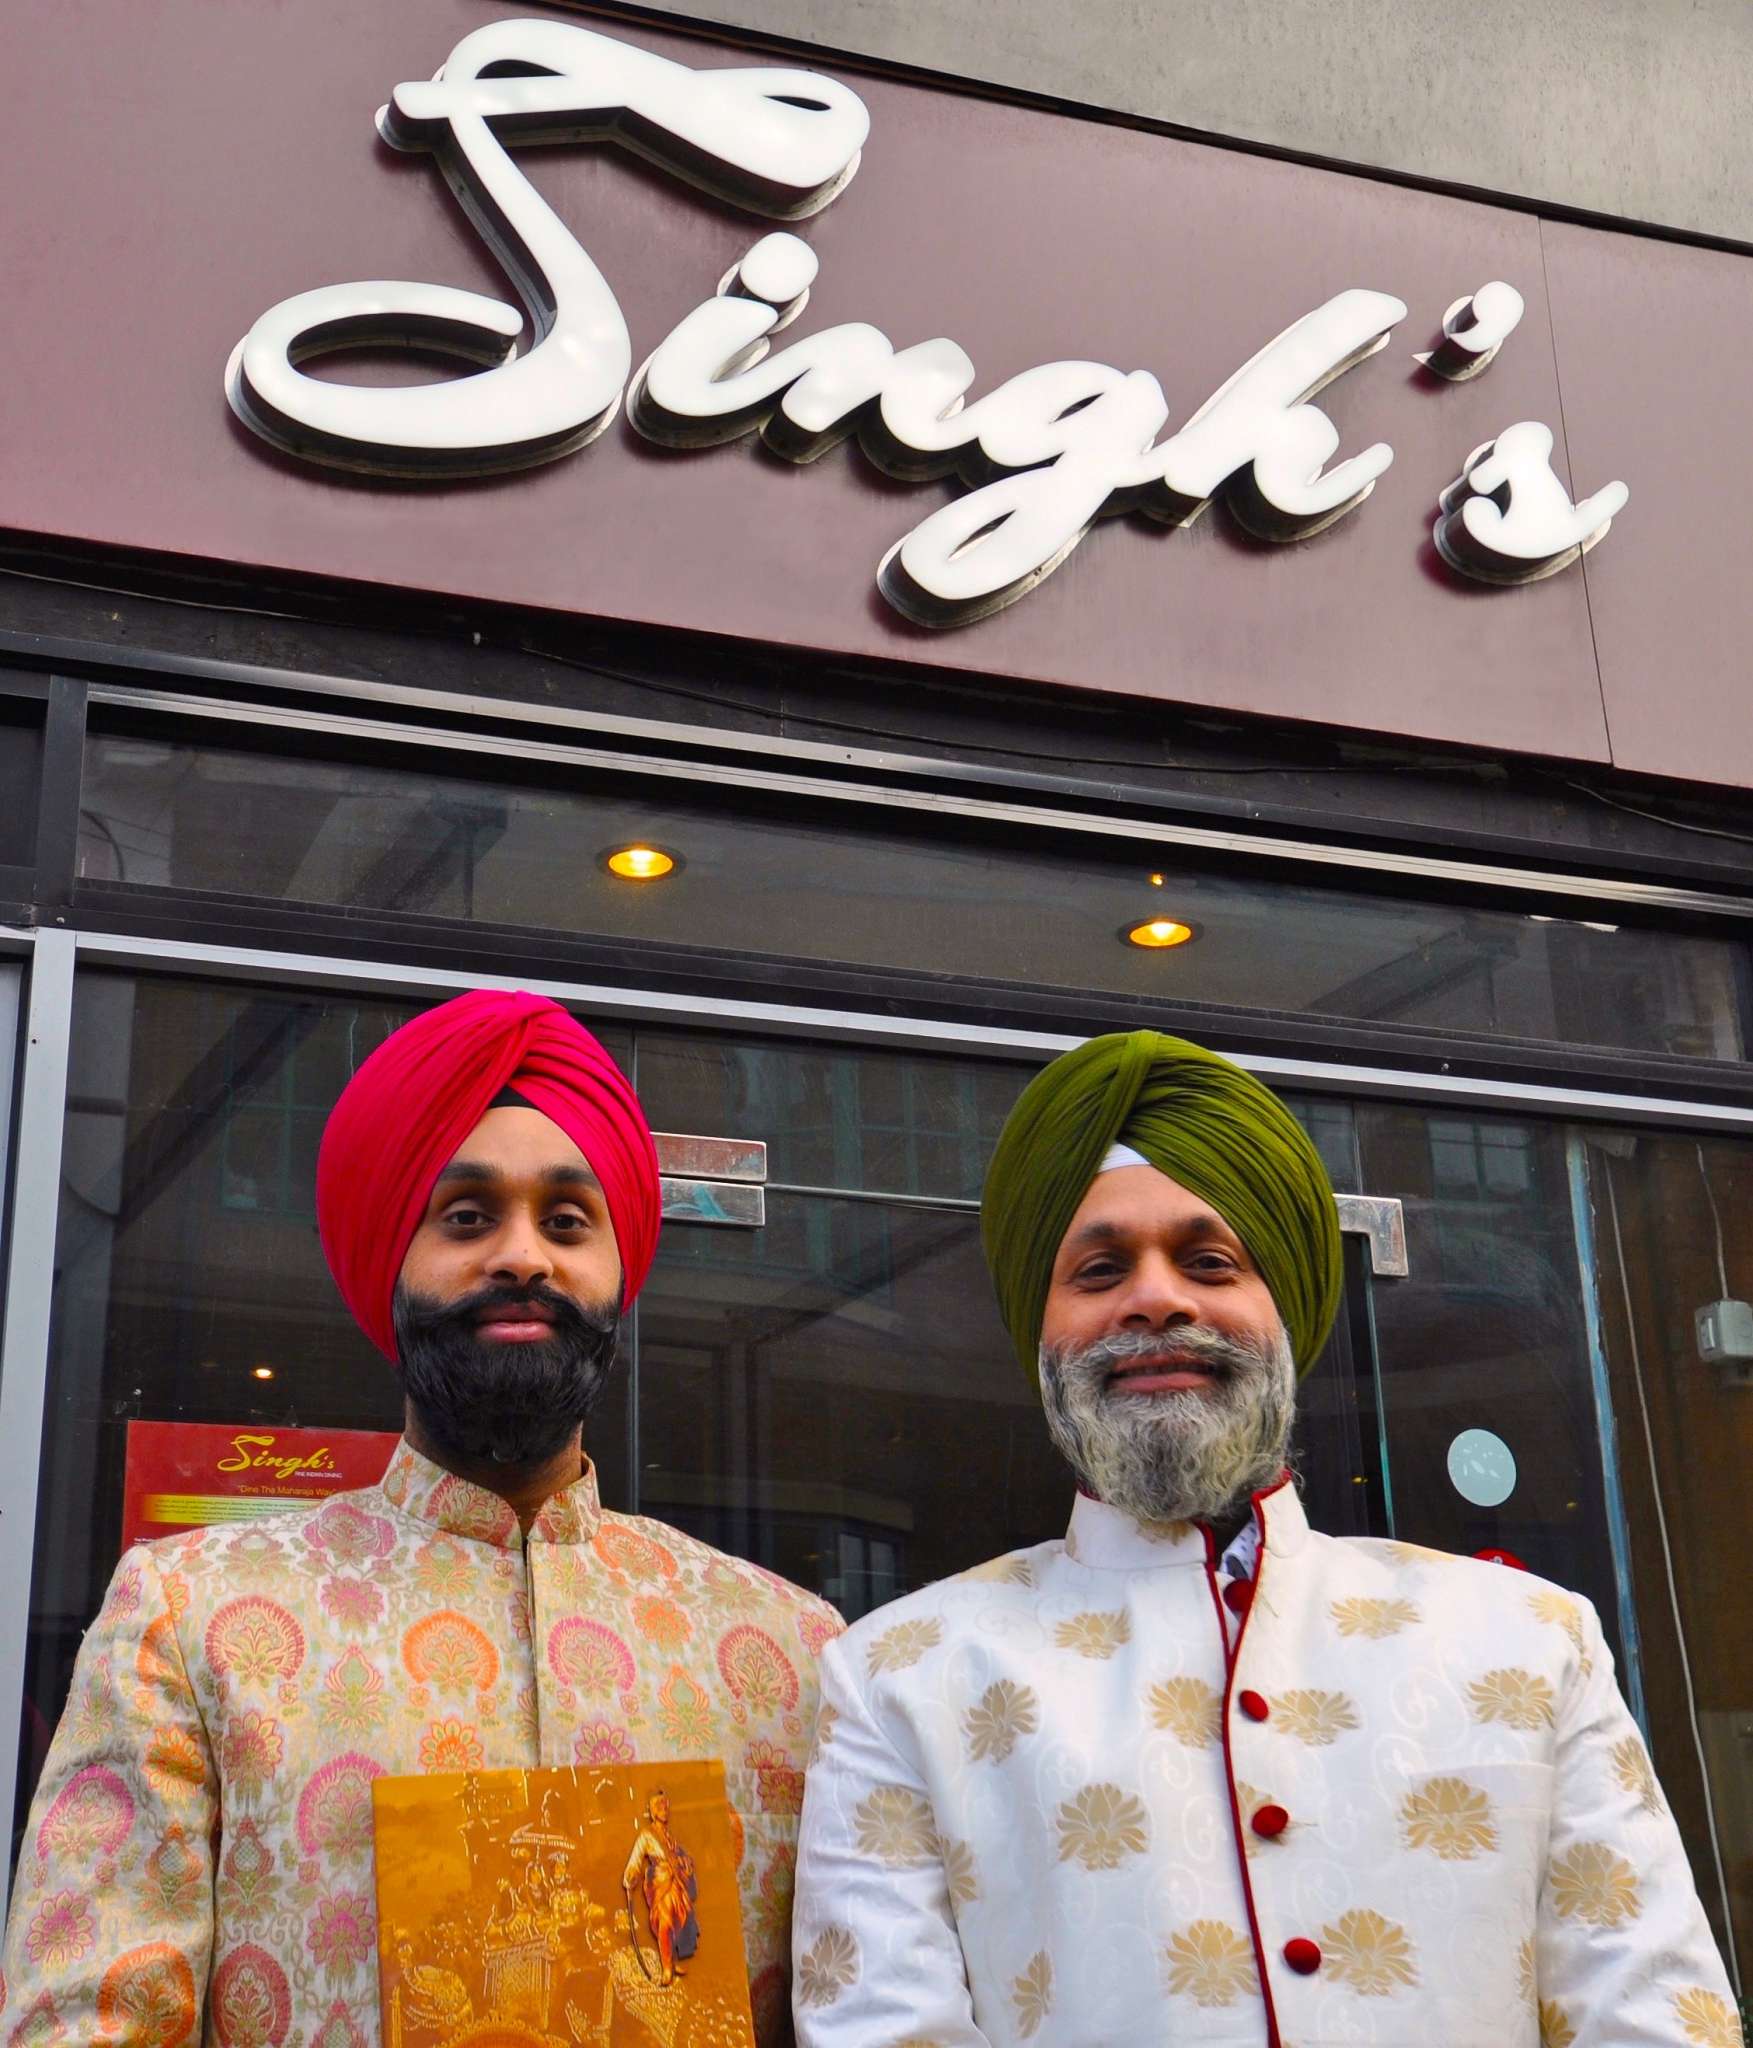 Press night: Singh’s Fine Dining Restaurant, Nottingham